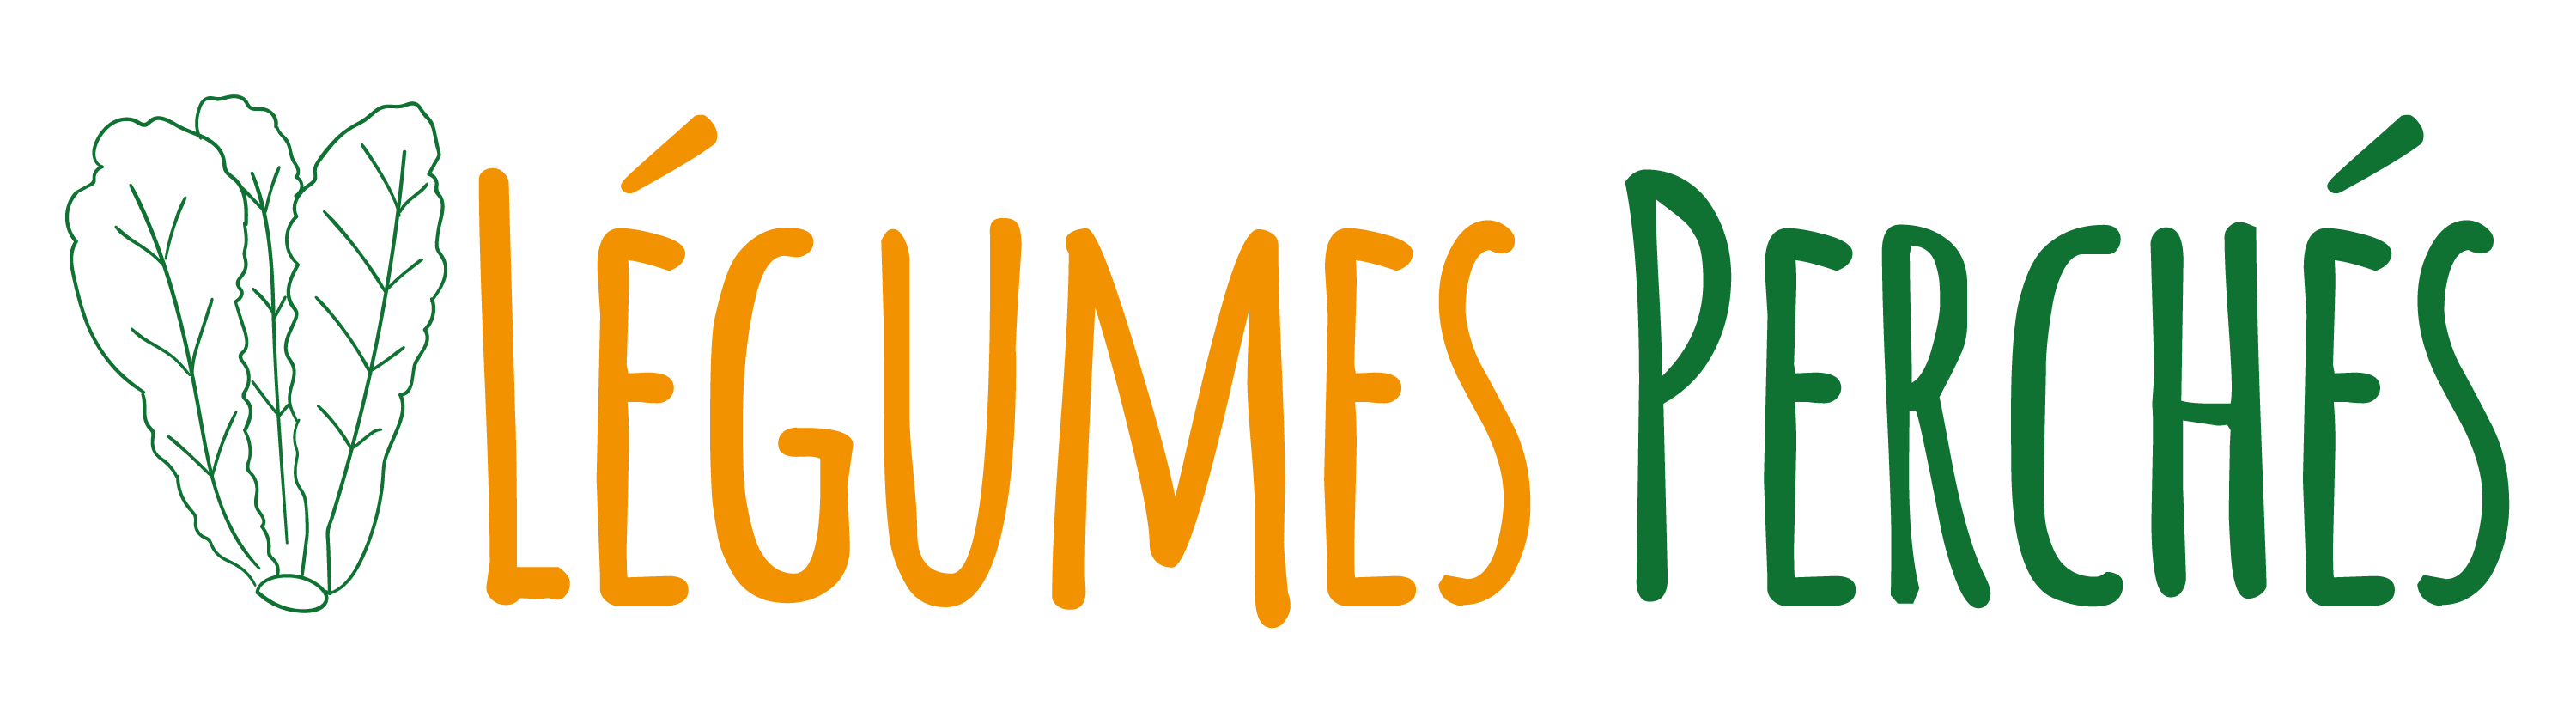 Logo Légumes perchés